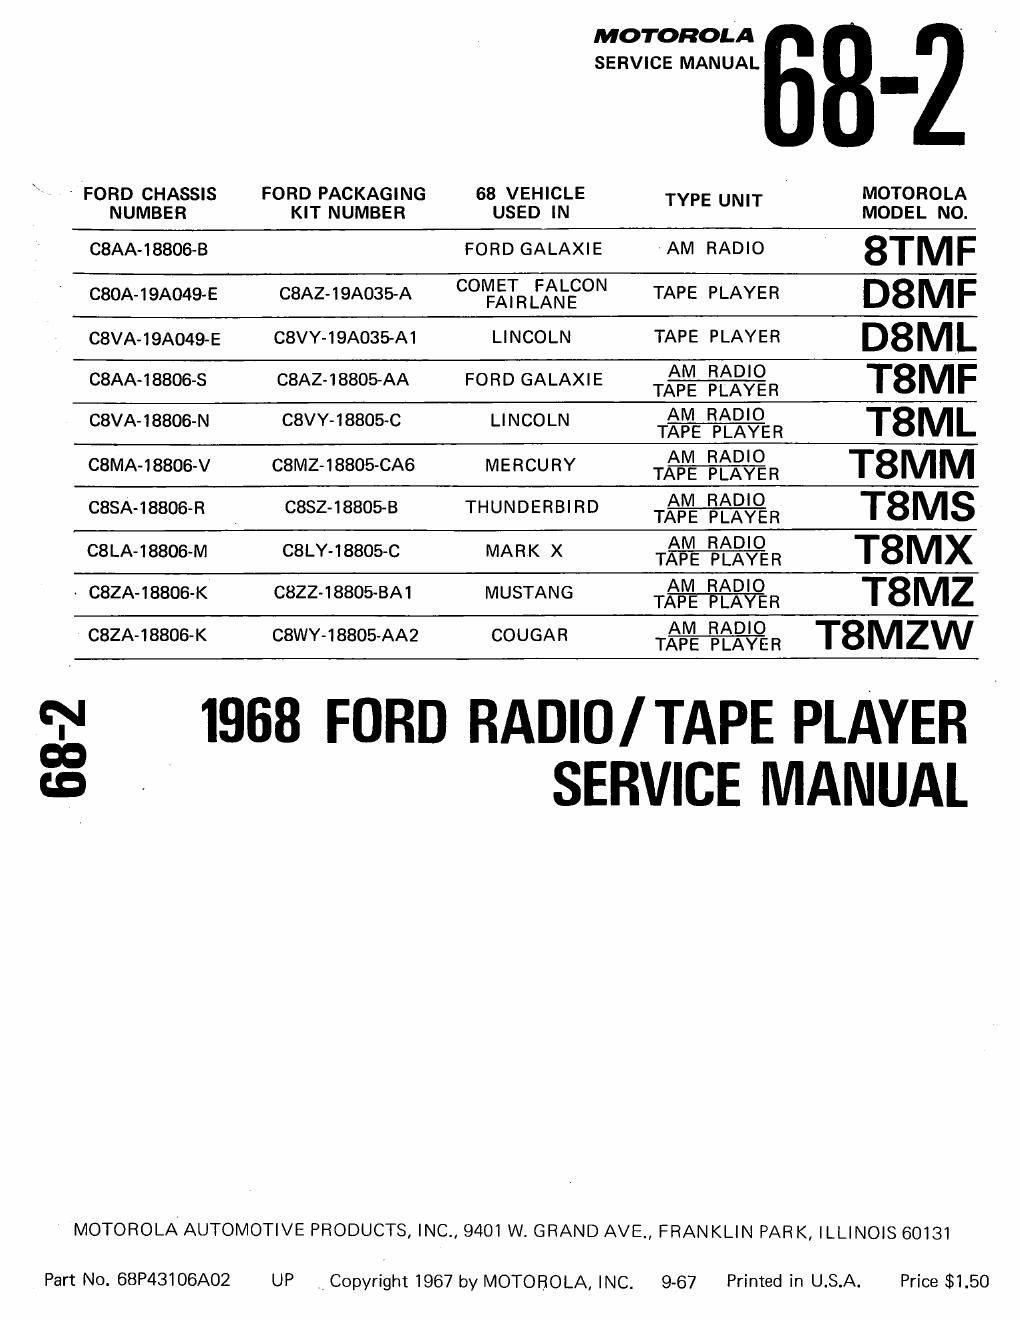 motorola t 8 mz service manual